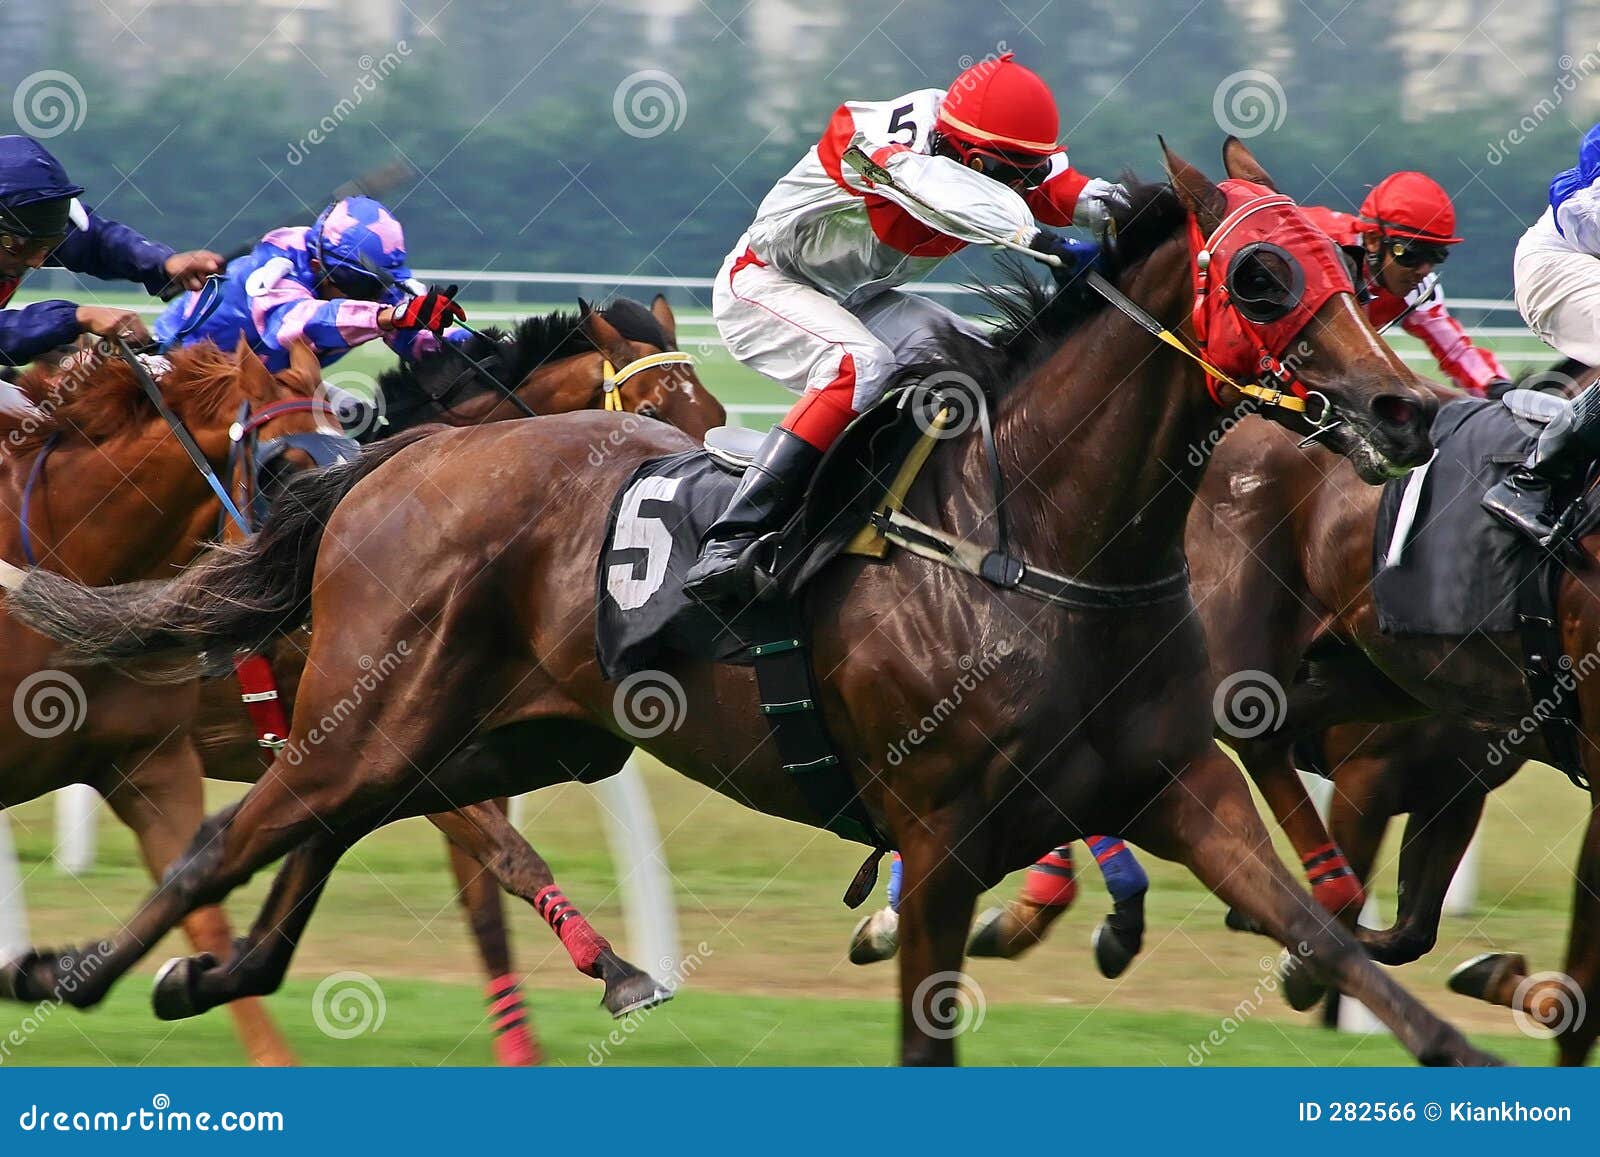 horse-racing-royalty-free-stock-image-image-282566